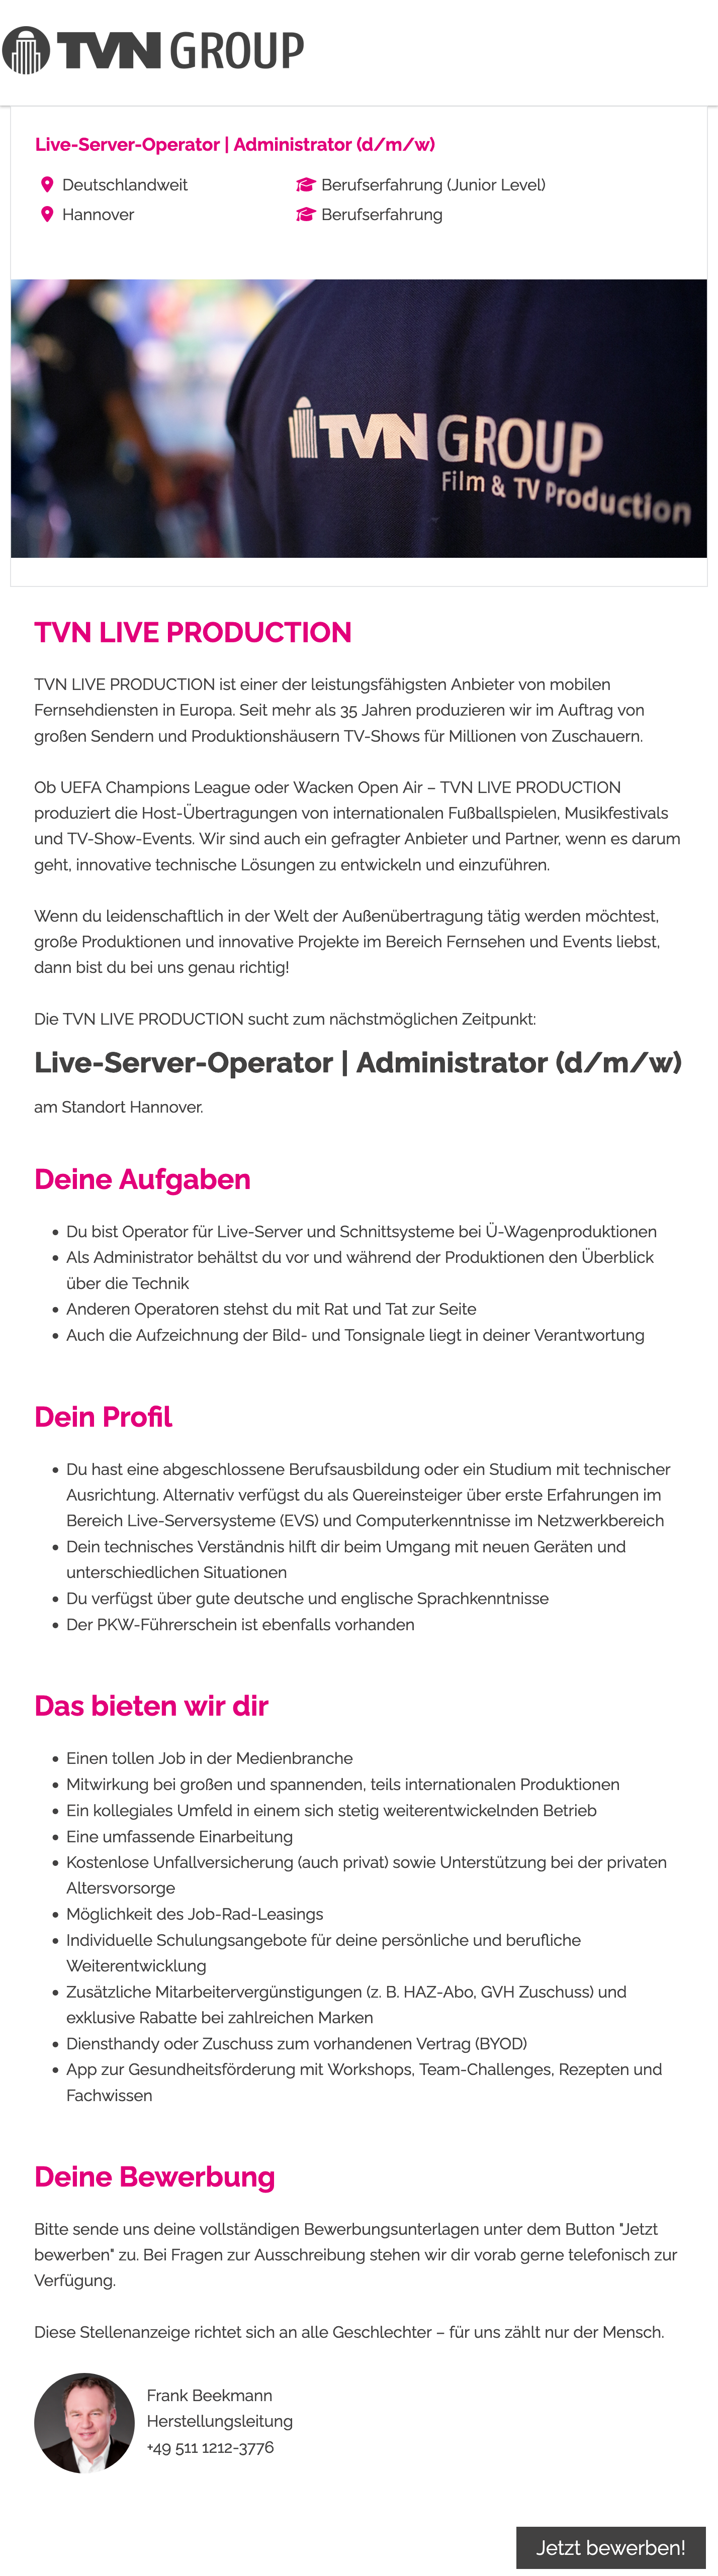 Live-Server Operator / Administrator (d/m/w)